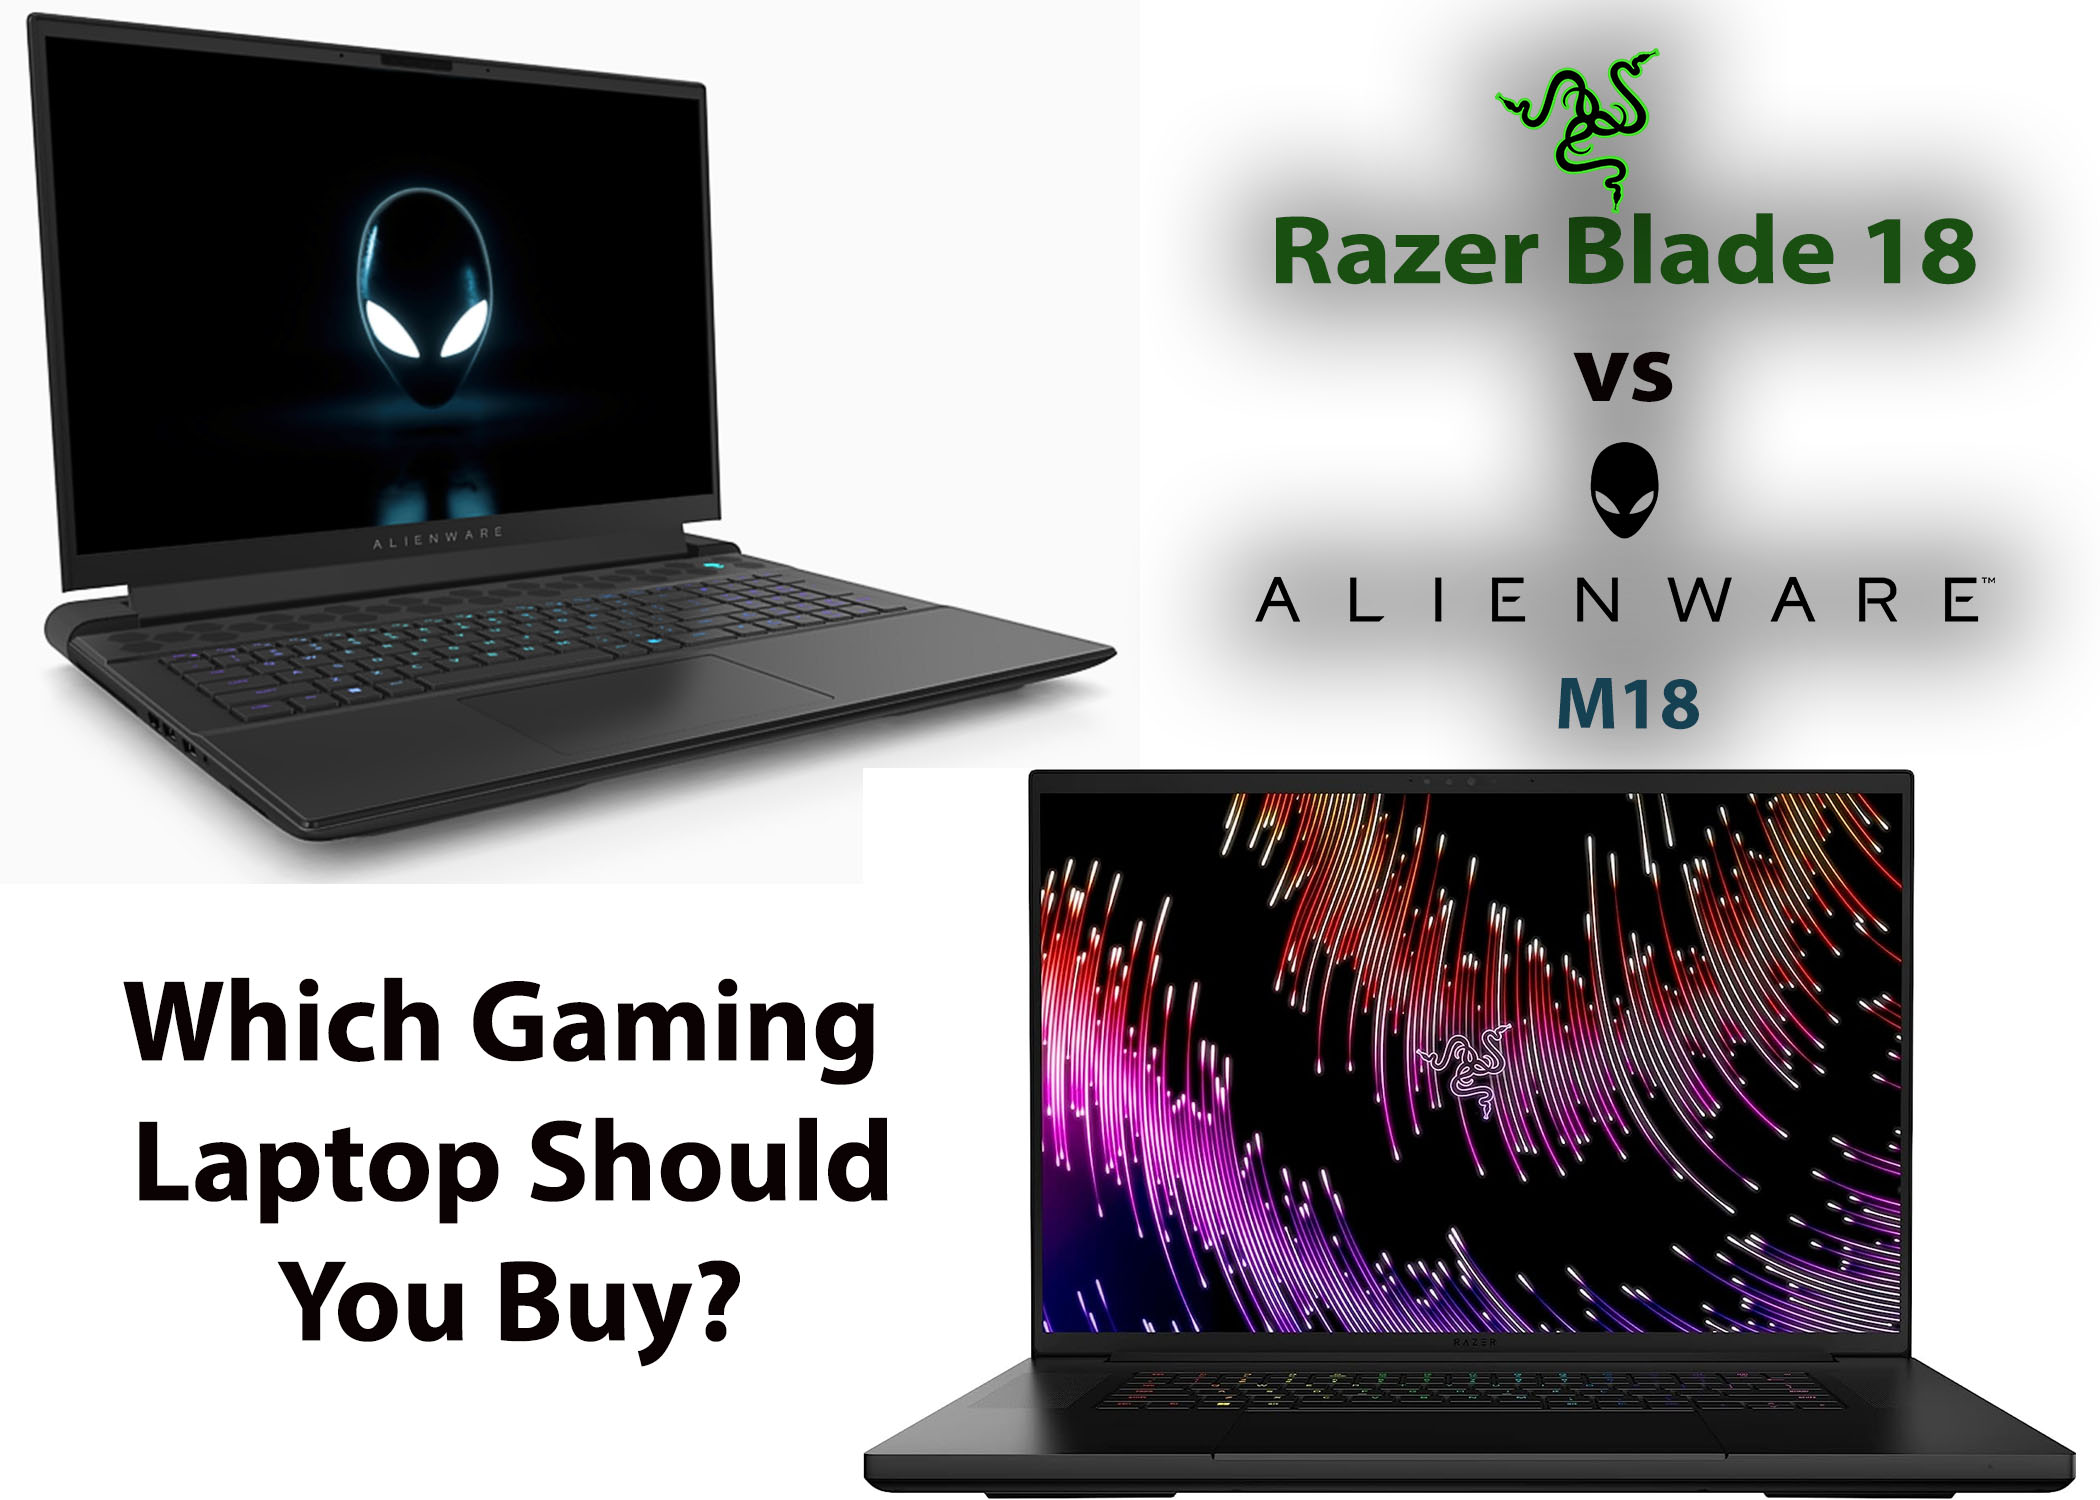 Razer Blade 18 vs Alienware M18: Which One Should You Buy?